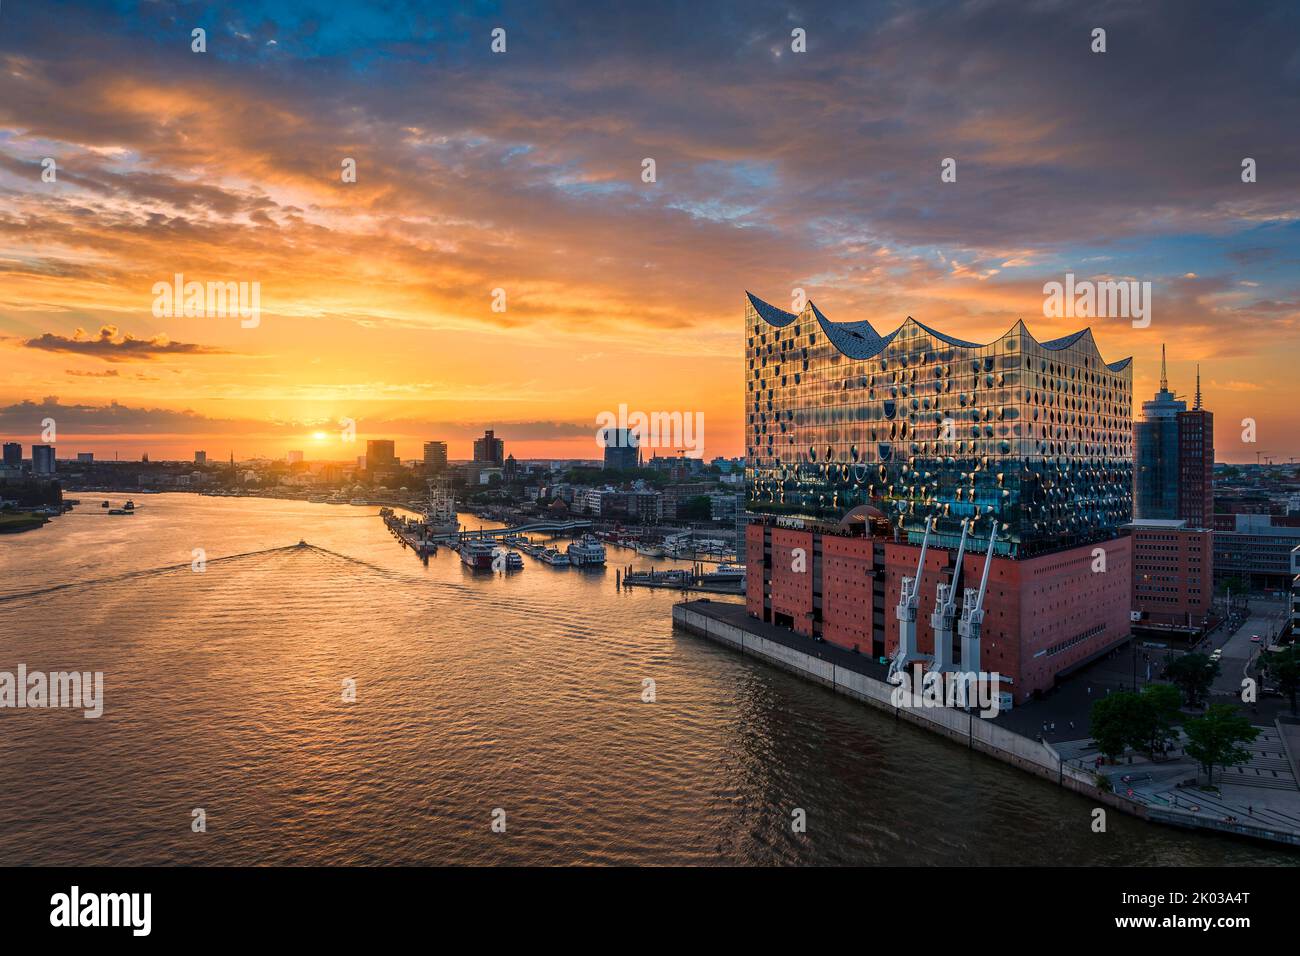 Sunset at the Elbphilharmonie in Hamburg, Germany Stock Photo